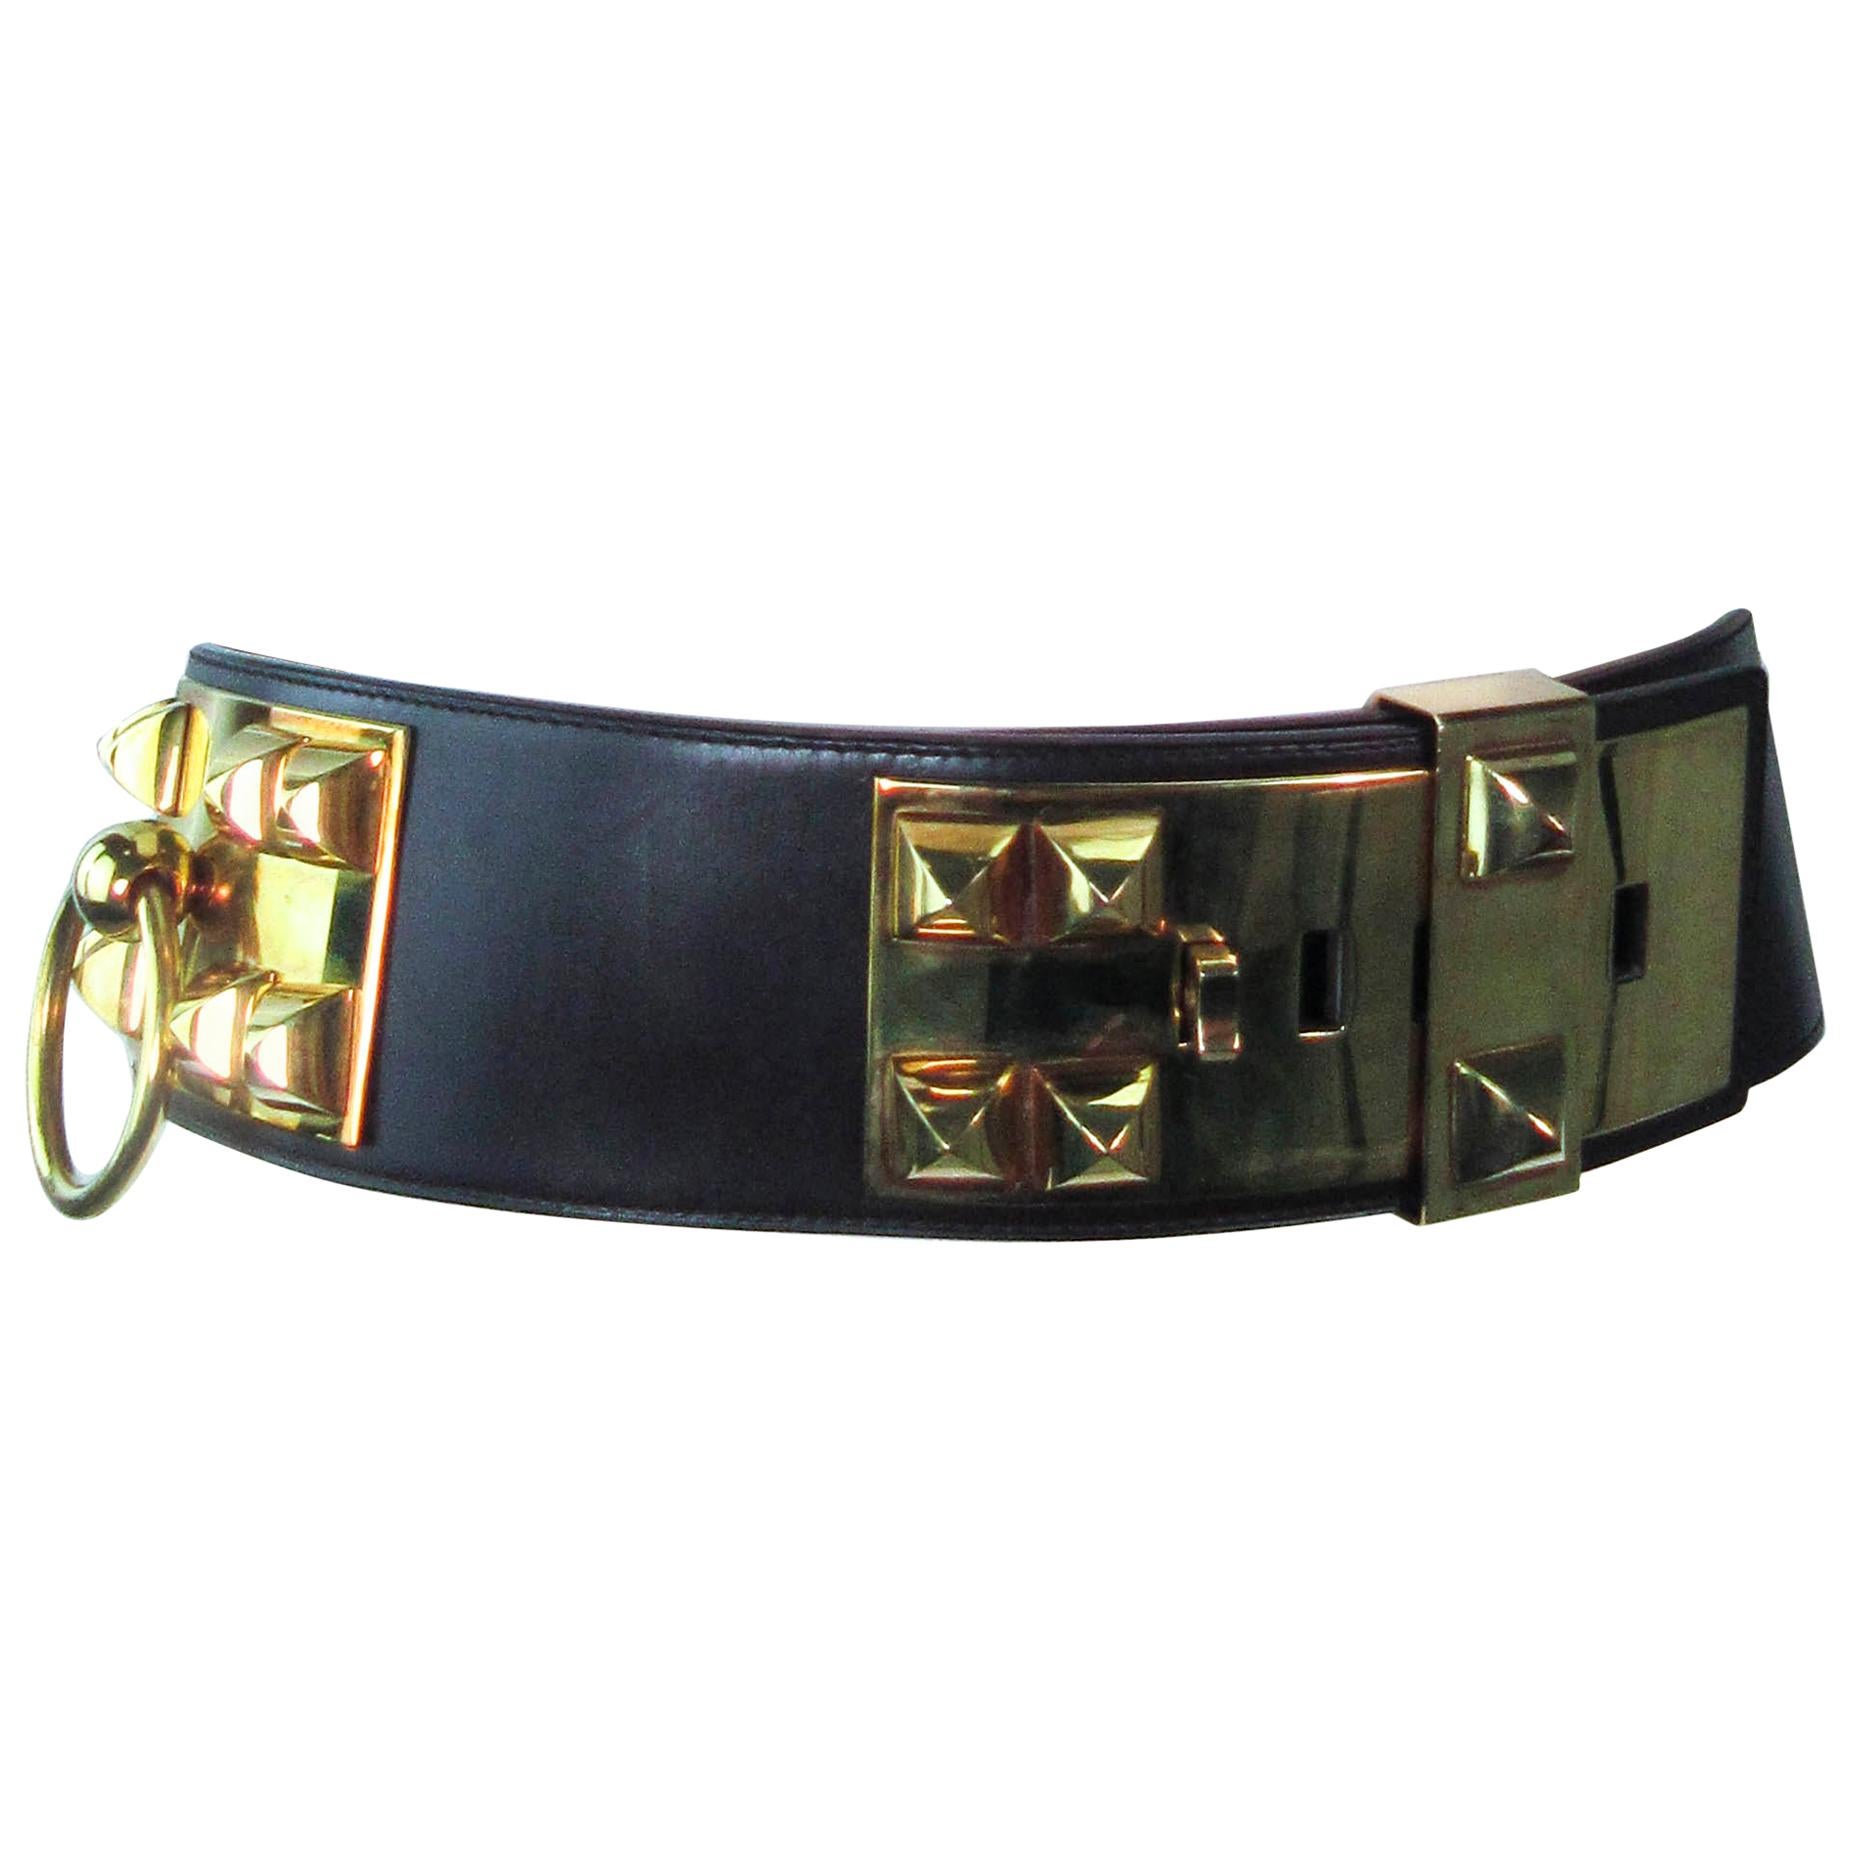 HERMES Collier De Chien Vintage Brown Leather Belt with Gold Hardware Size Large